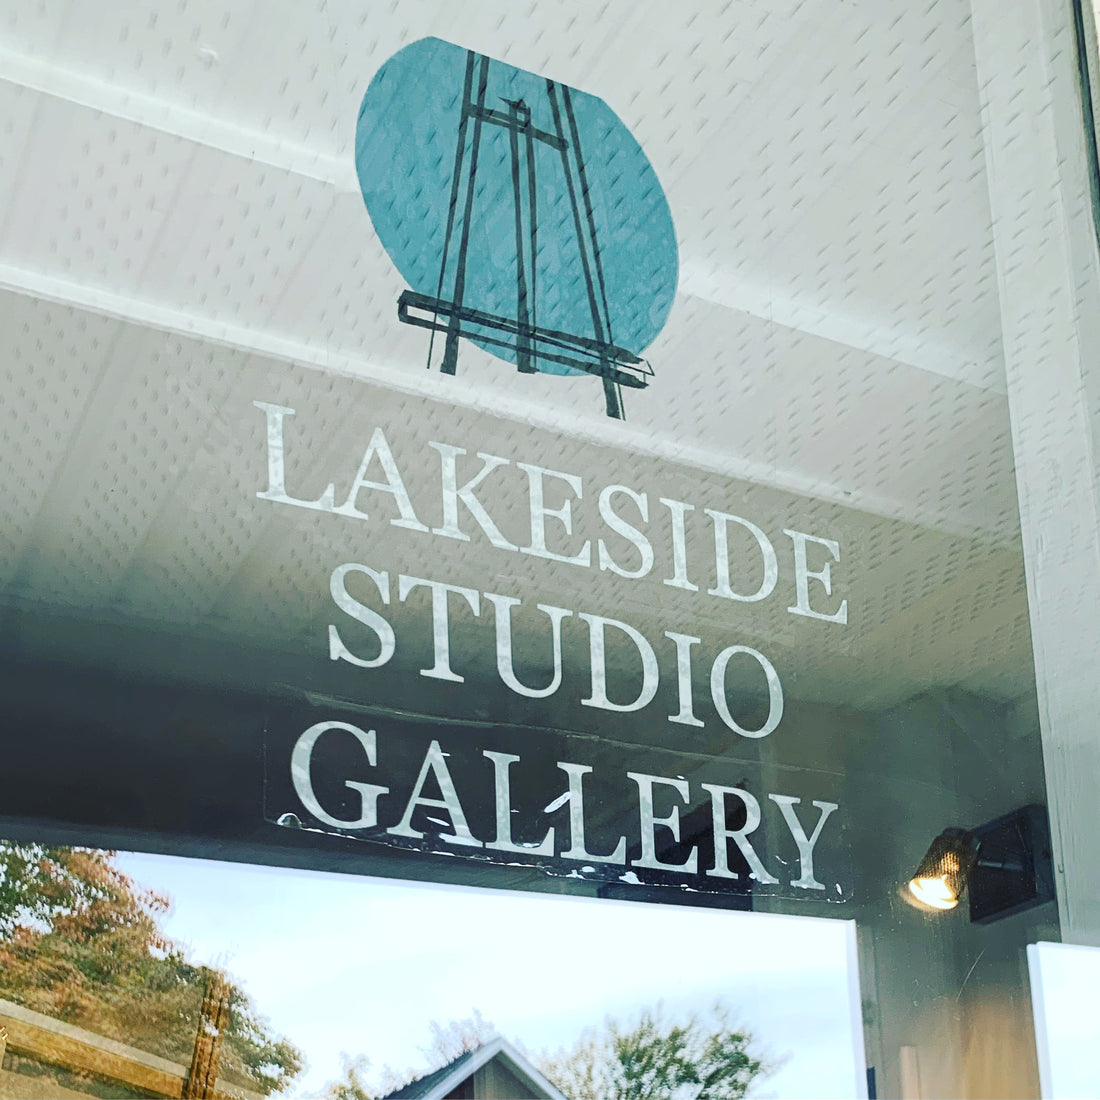 The Lakeside Studio Gallery: coming next week